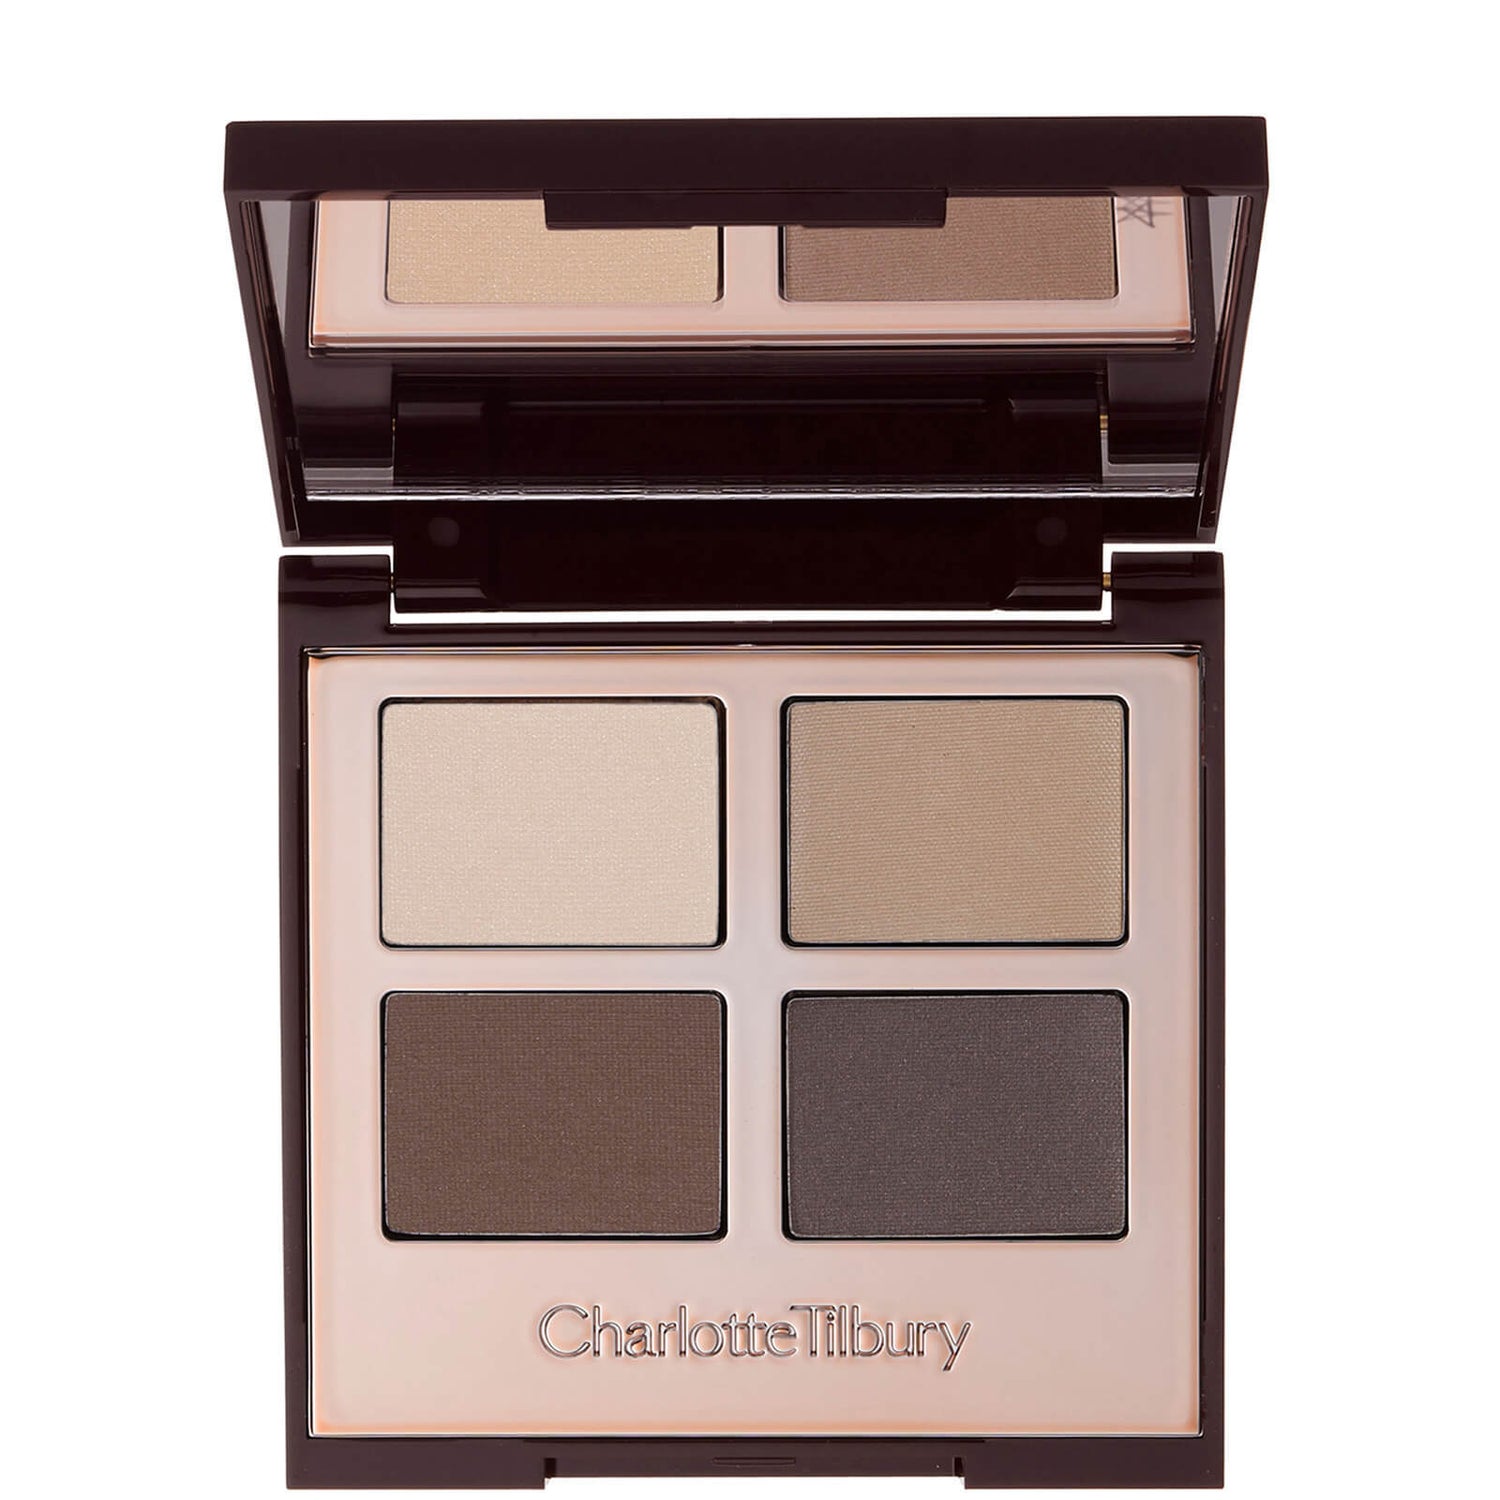 Charlotte Tilbury Luxury Palette - The Sophisticate